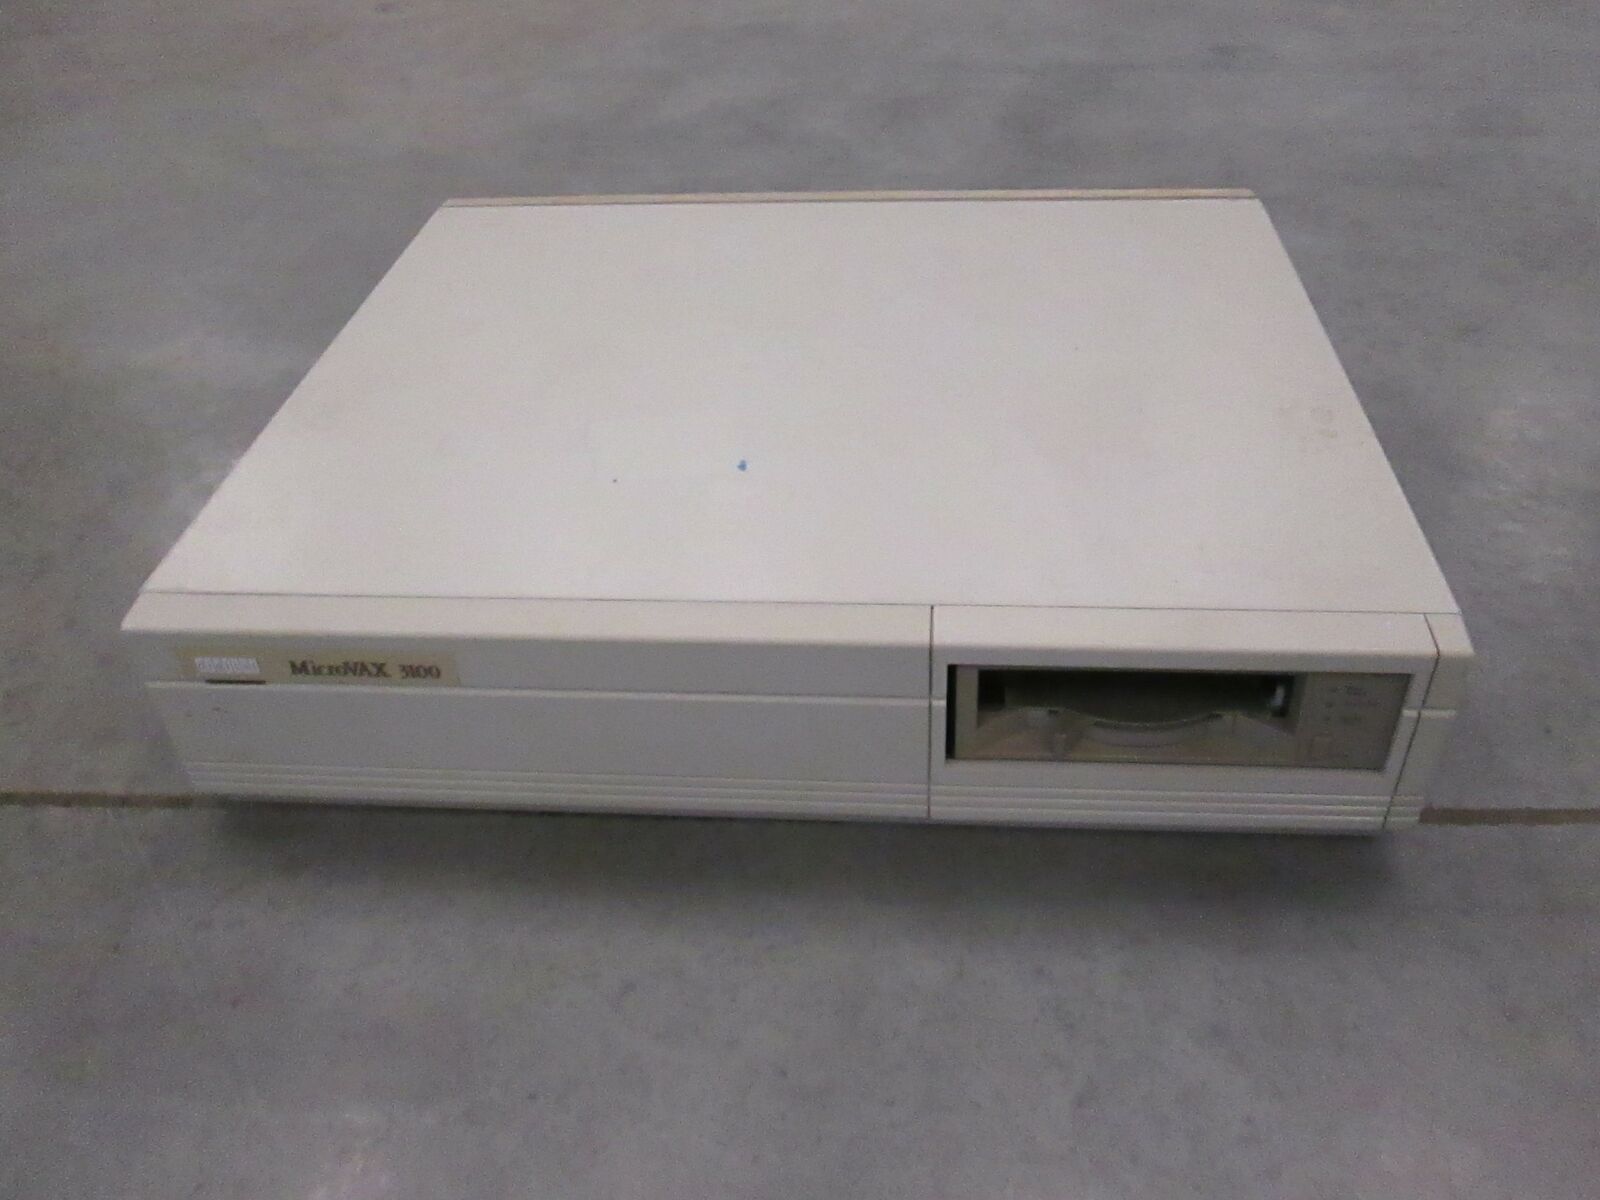 Digital MicroVAX 3100 Series System, Used